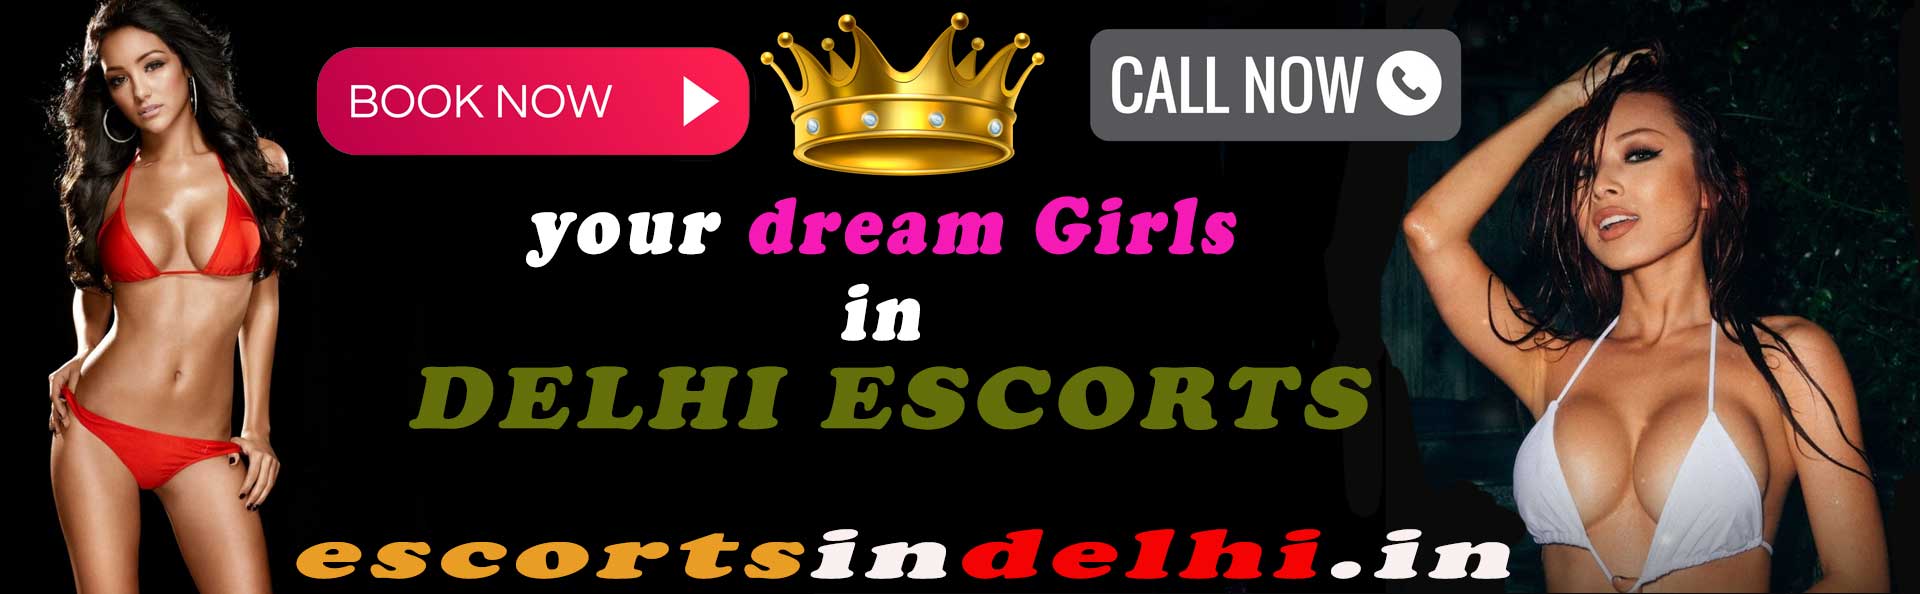 Call Girls Services Delhi